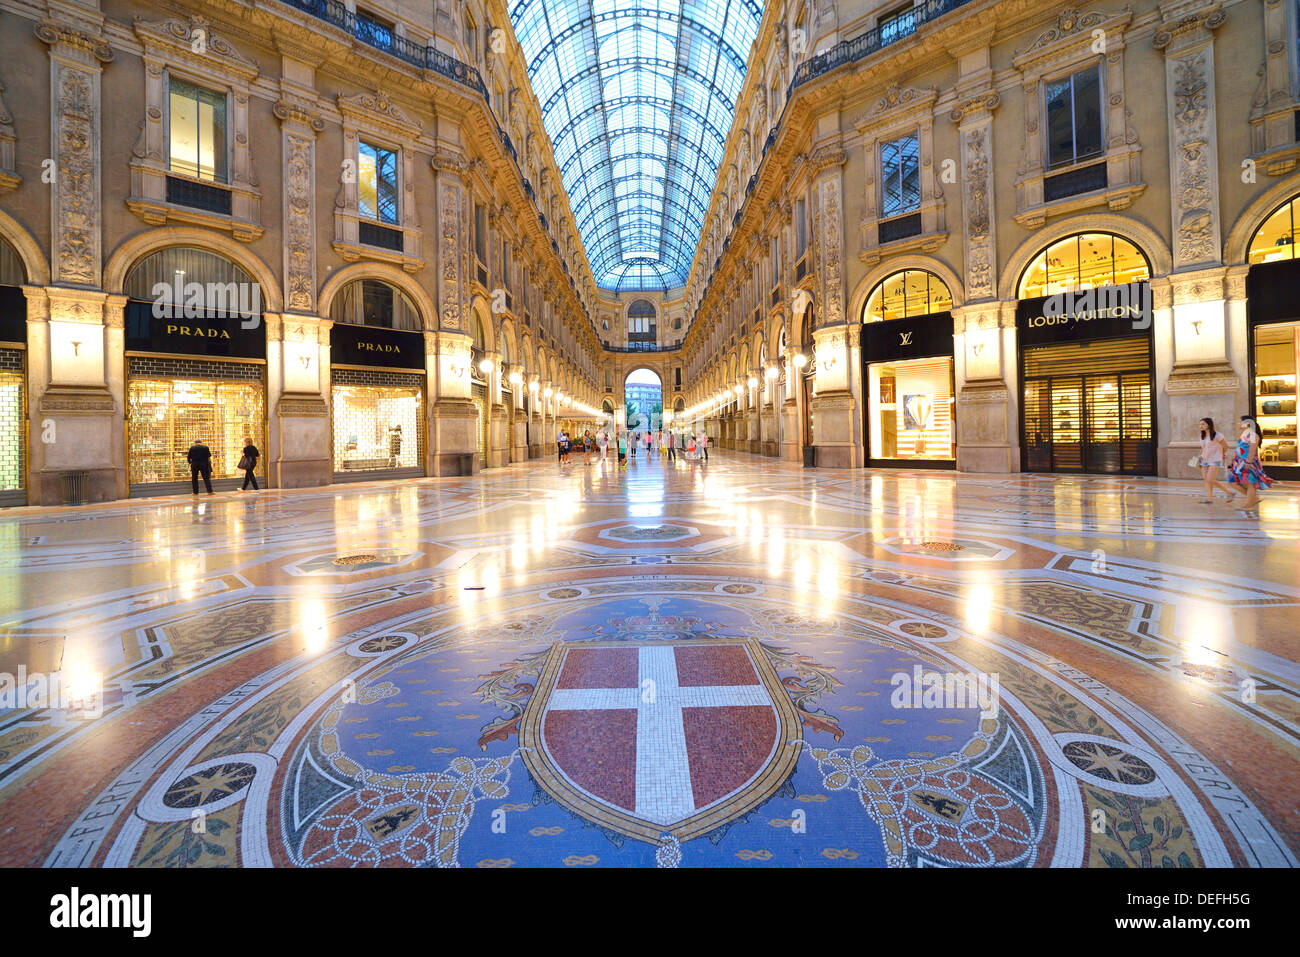 En marbre mosaïque, des armoiries de Milan, luxe galerie marchande Galleria Vittorio Emanuele II, Milan, Lombardie, Italie Banque D'Images